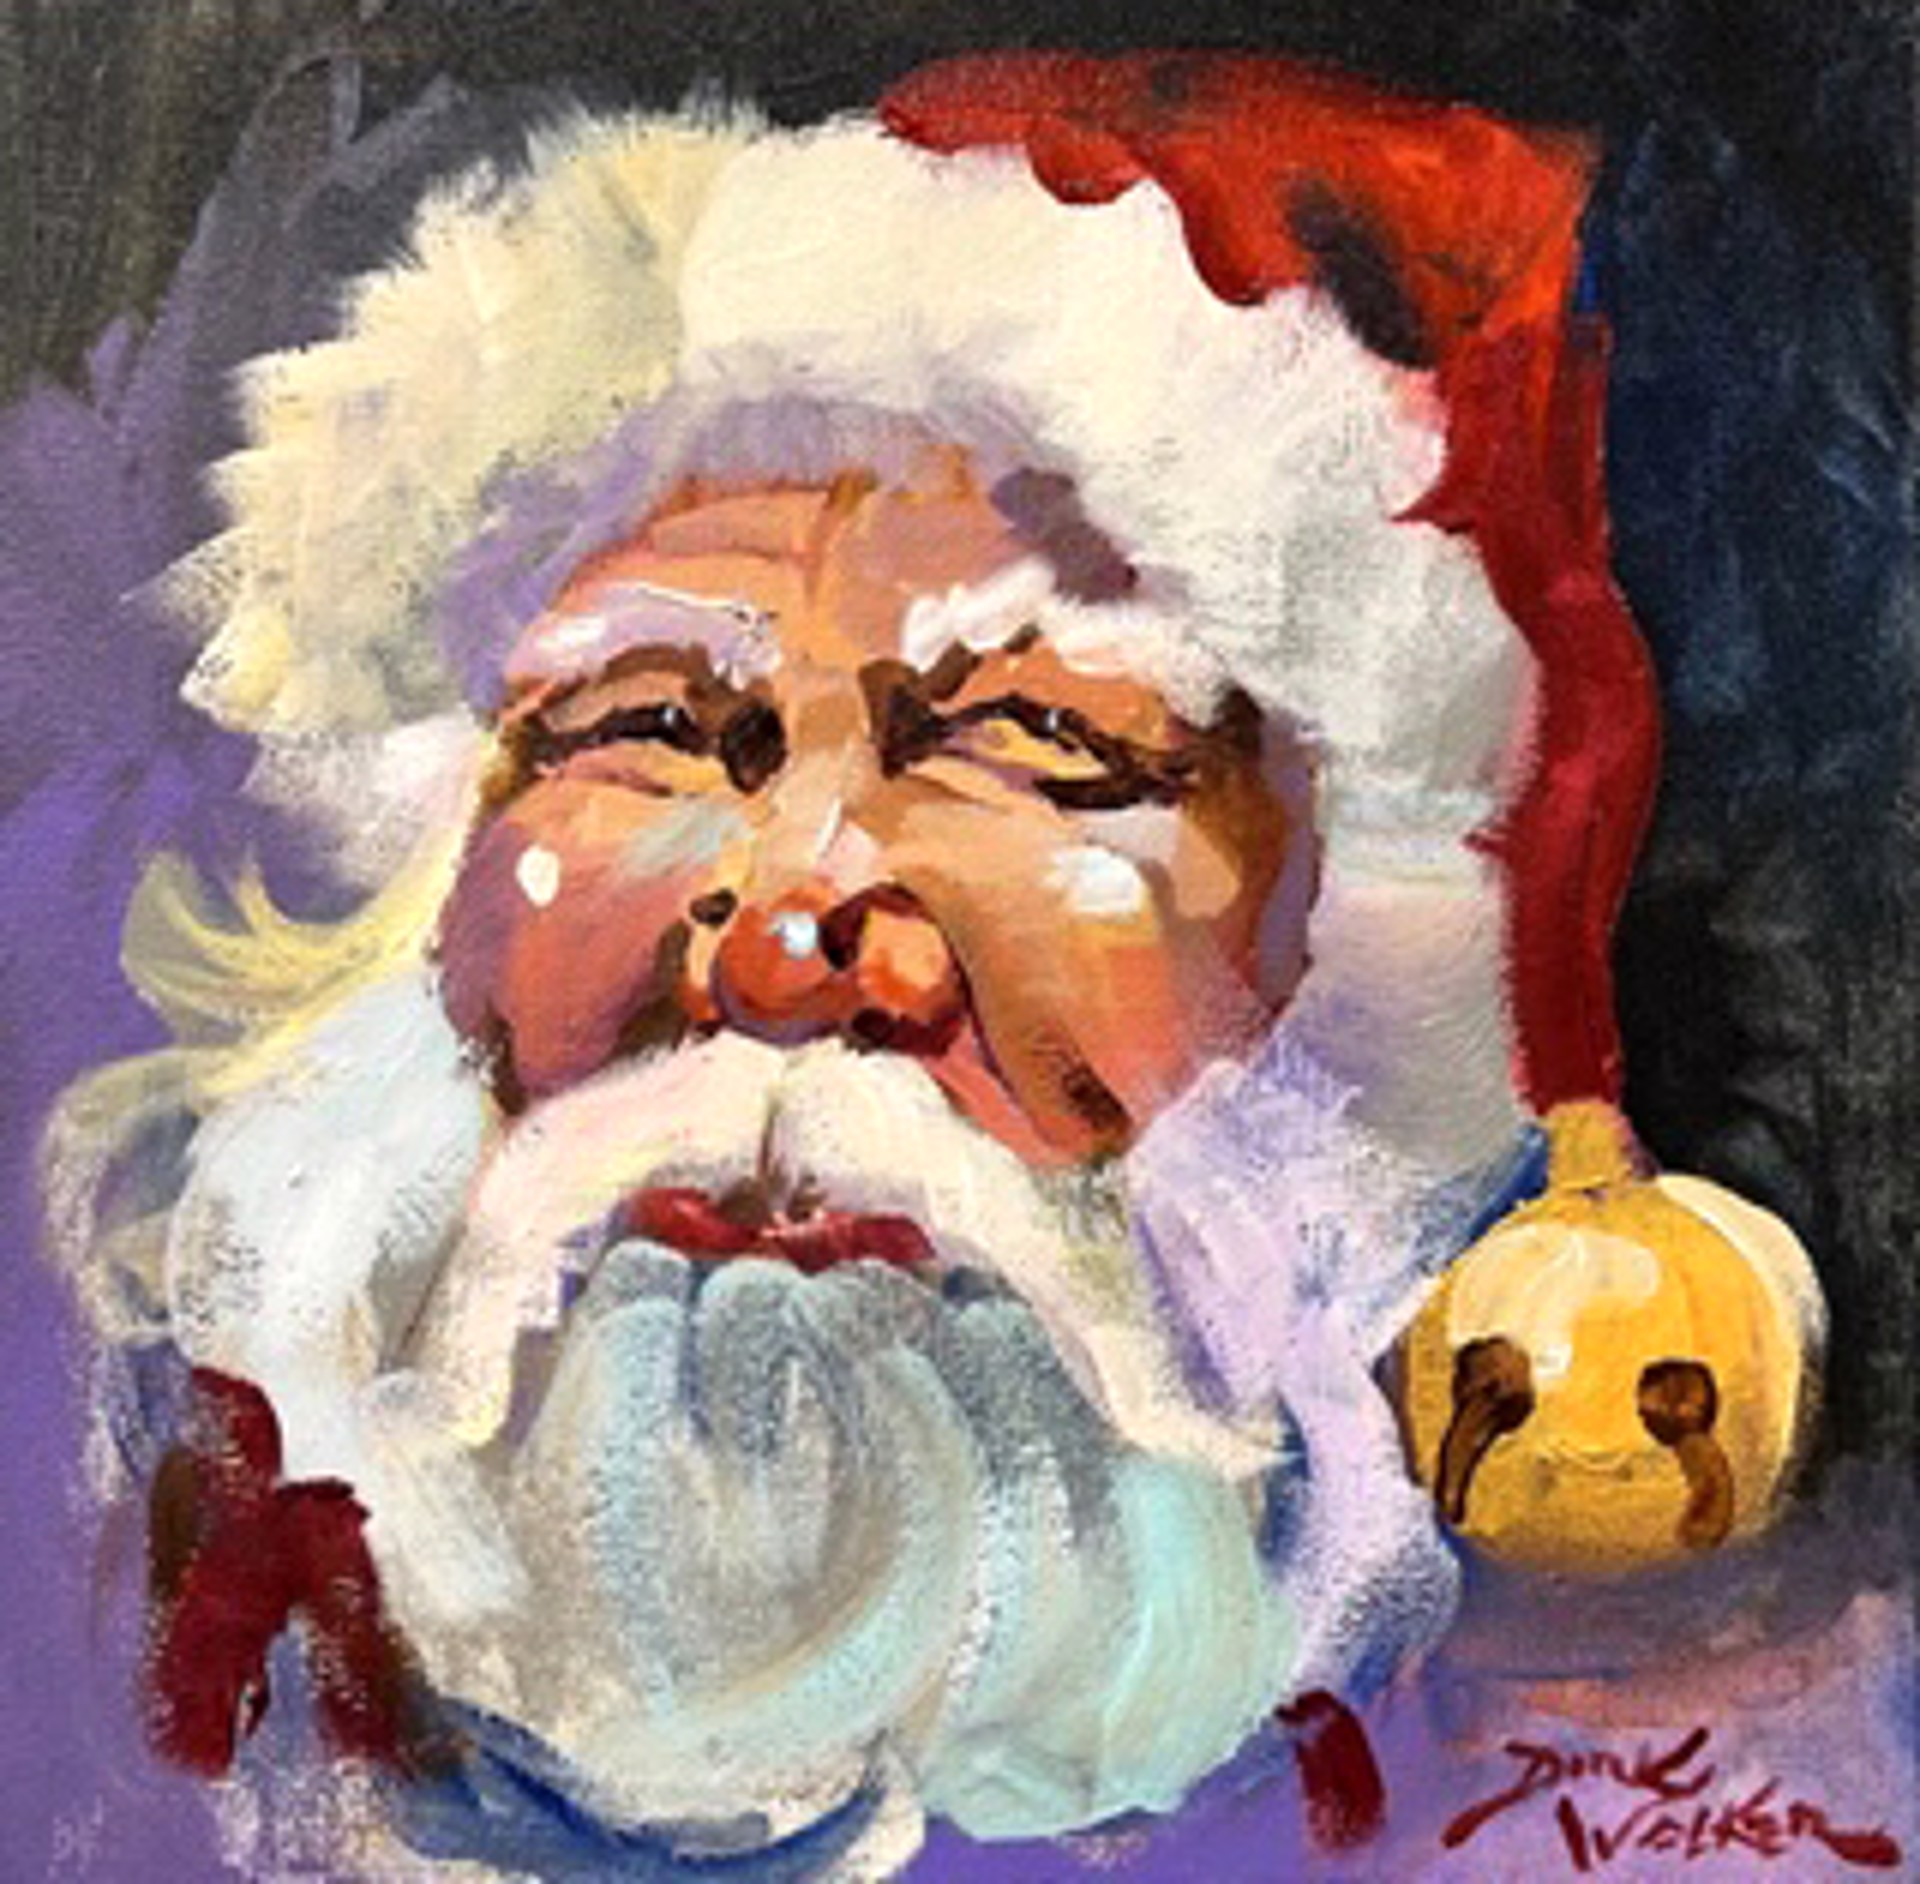 Santa III by Dirk Walker